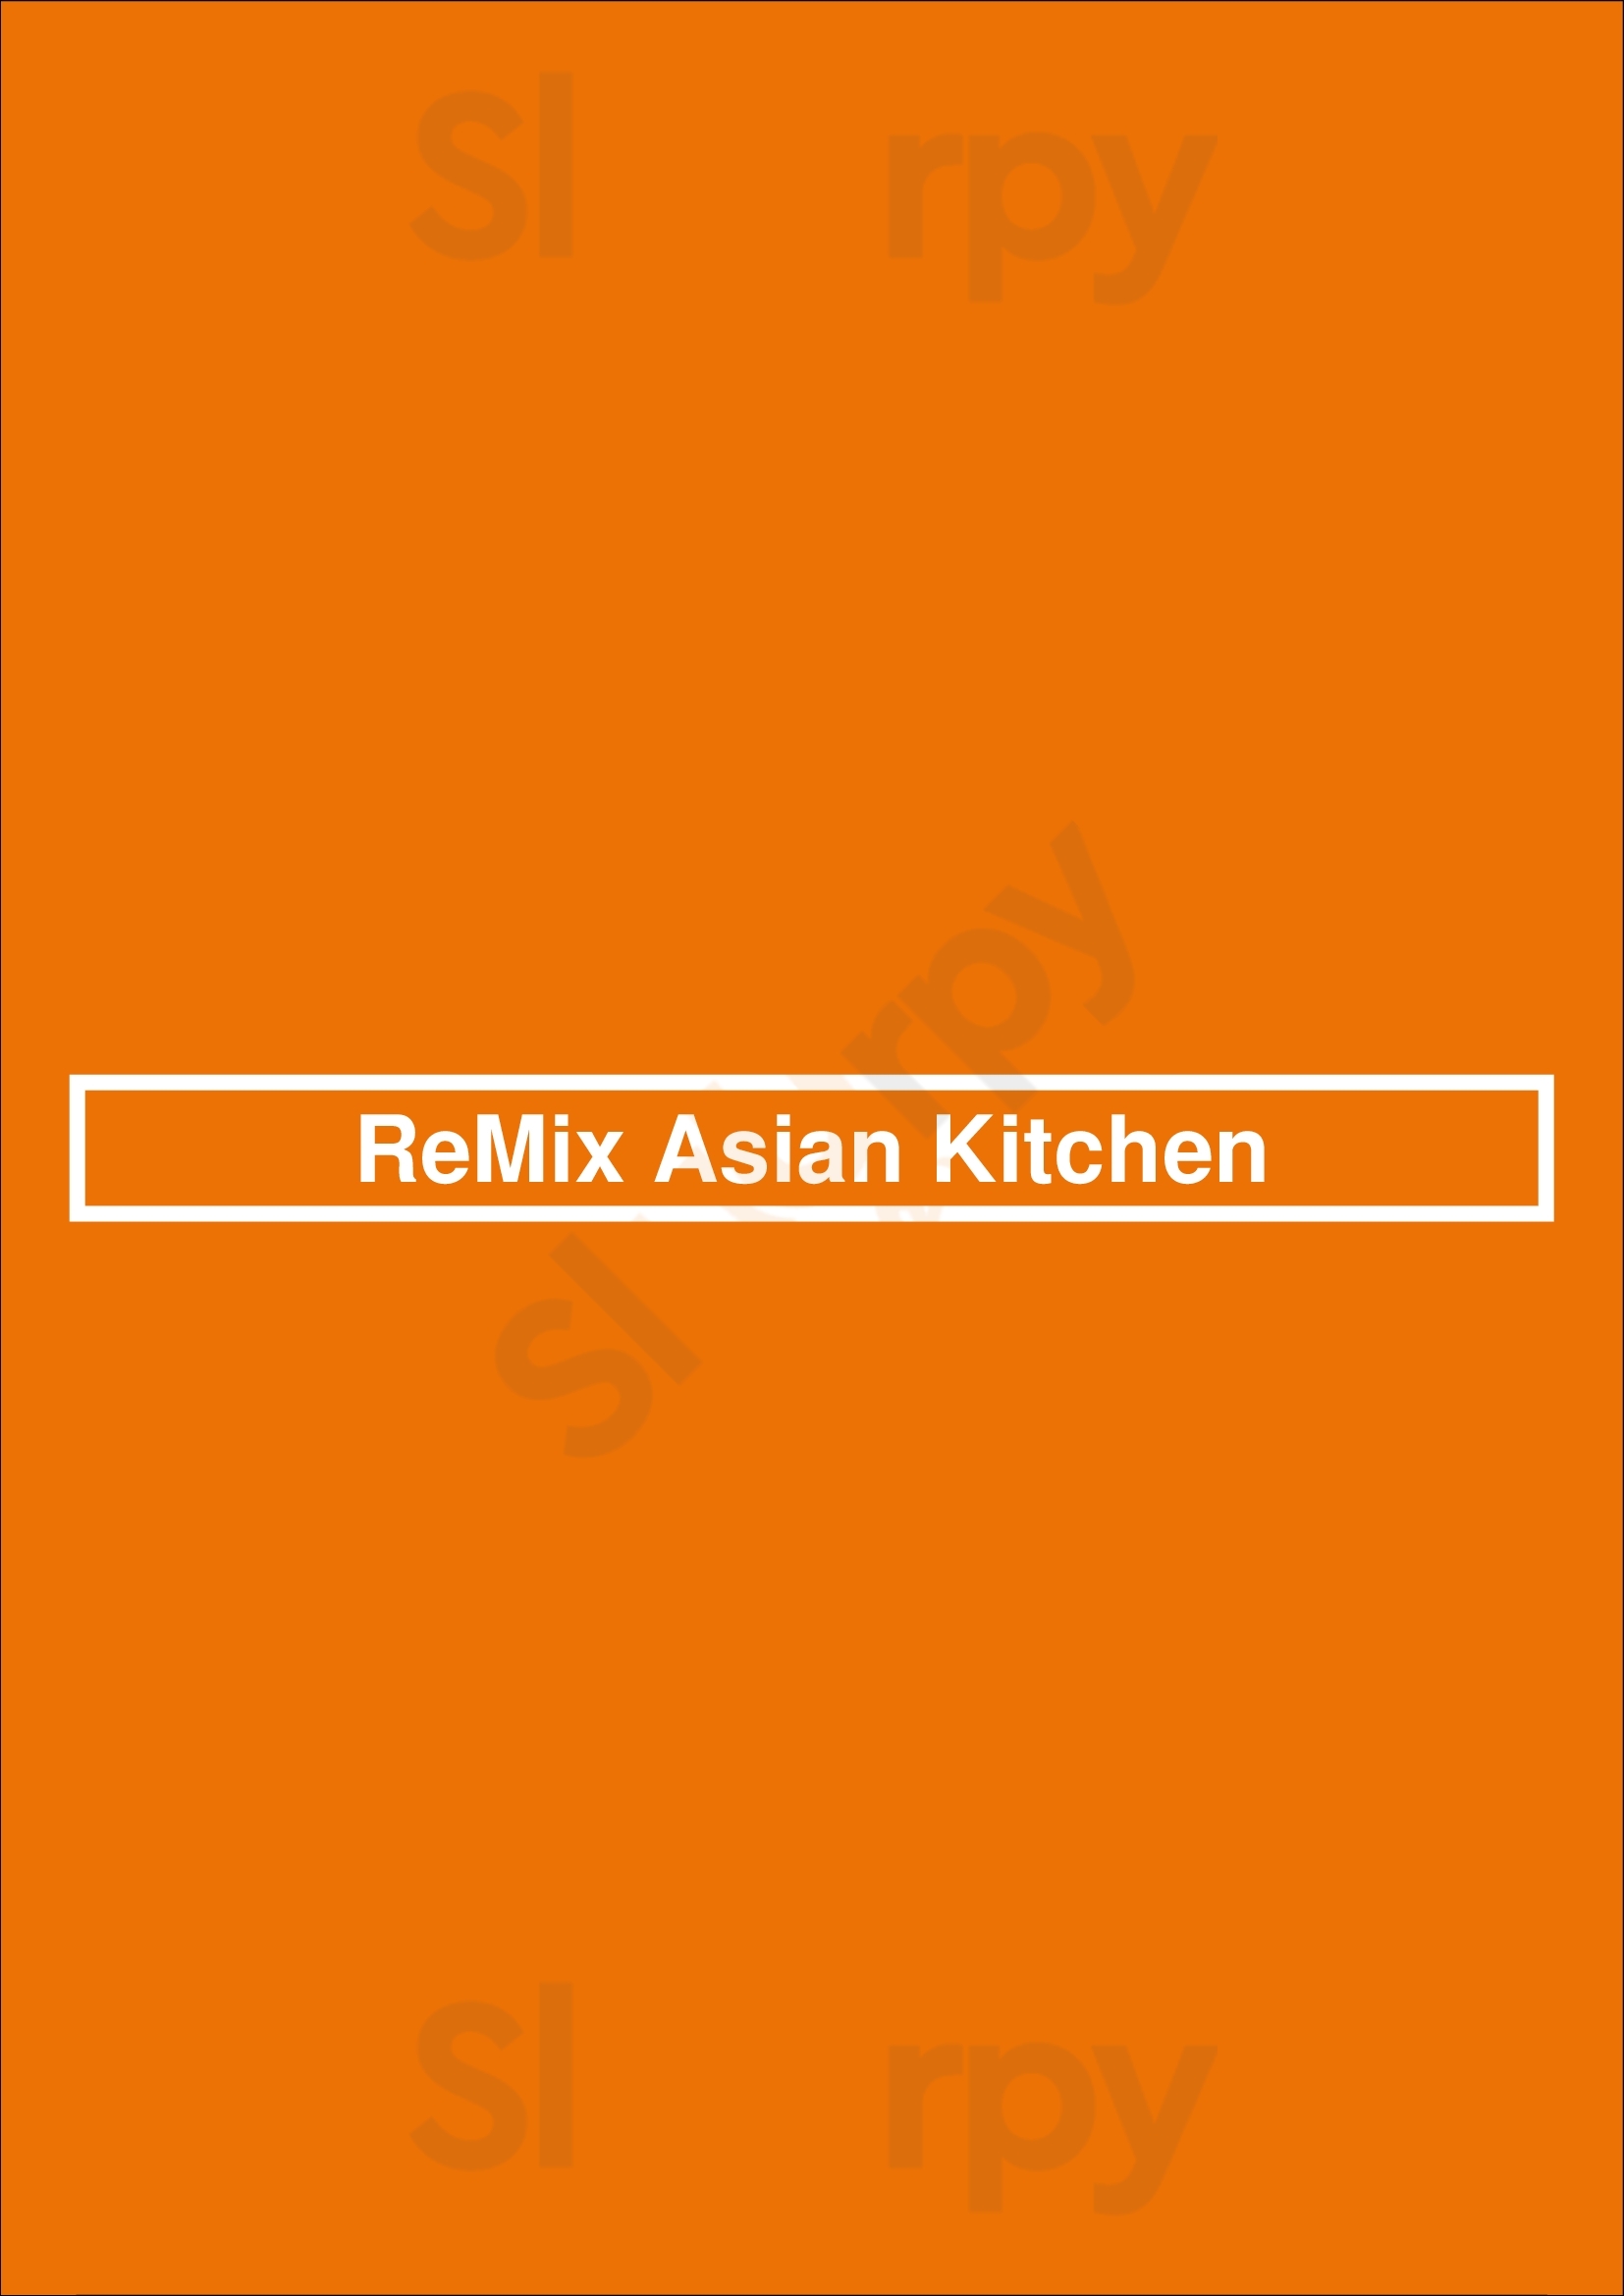 Remix Asian Kitchen Bakersfield Menu - 1